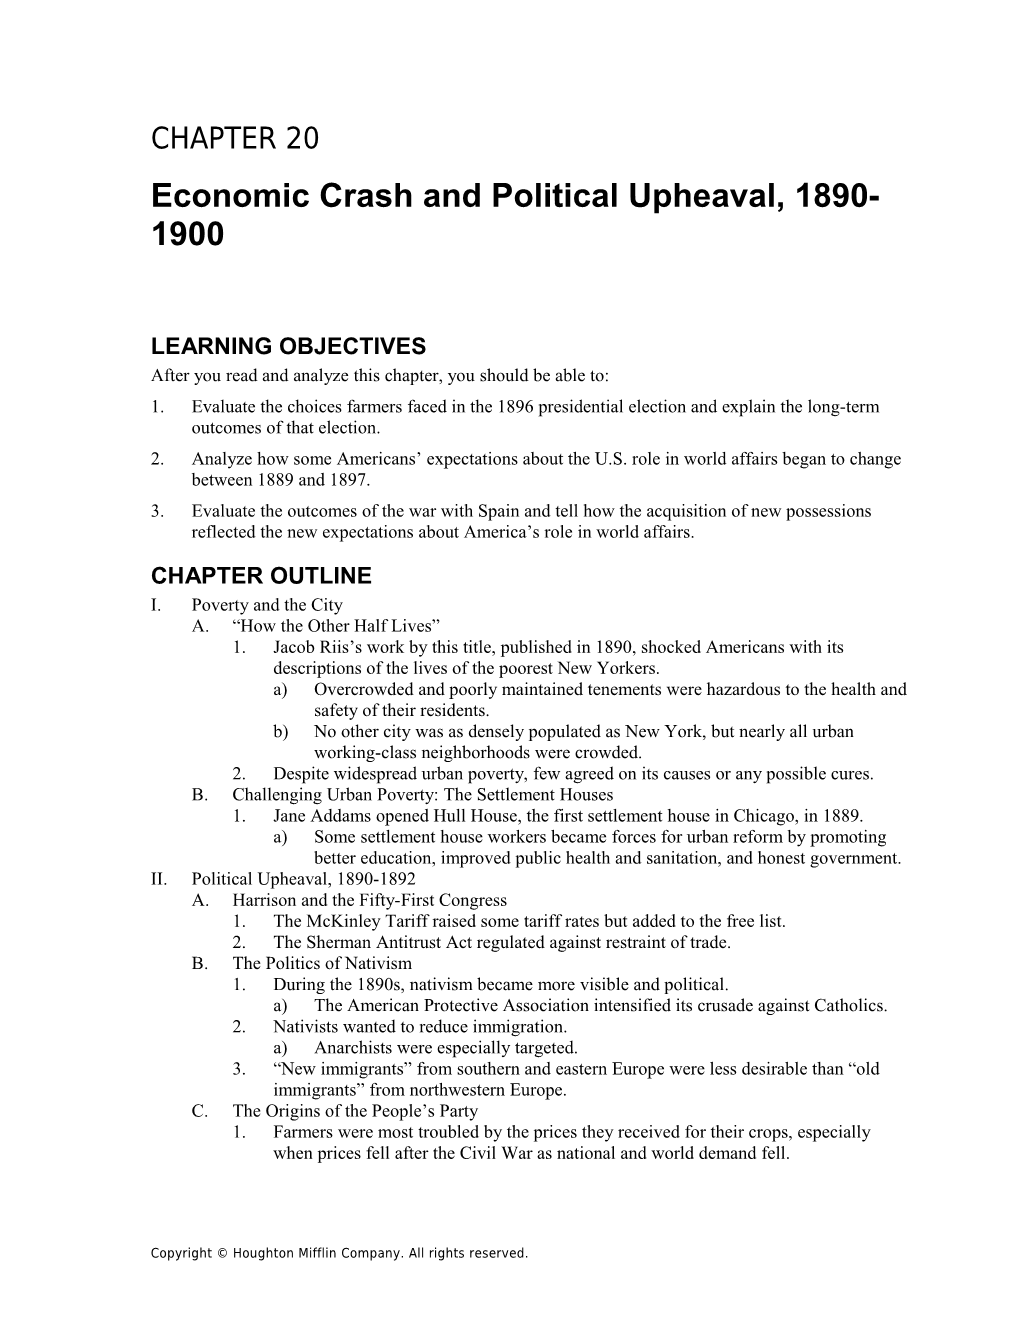 Chapter 20: Economic Crash and Political Upheaval, 1890-1900 1